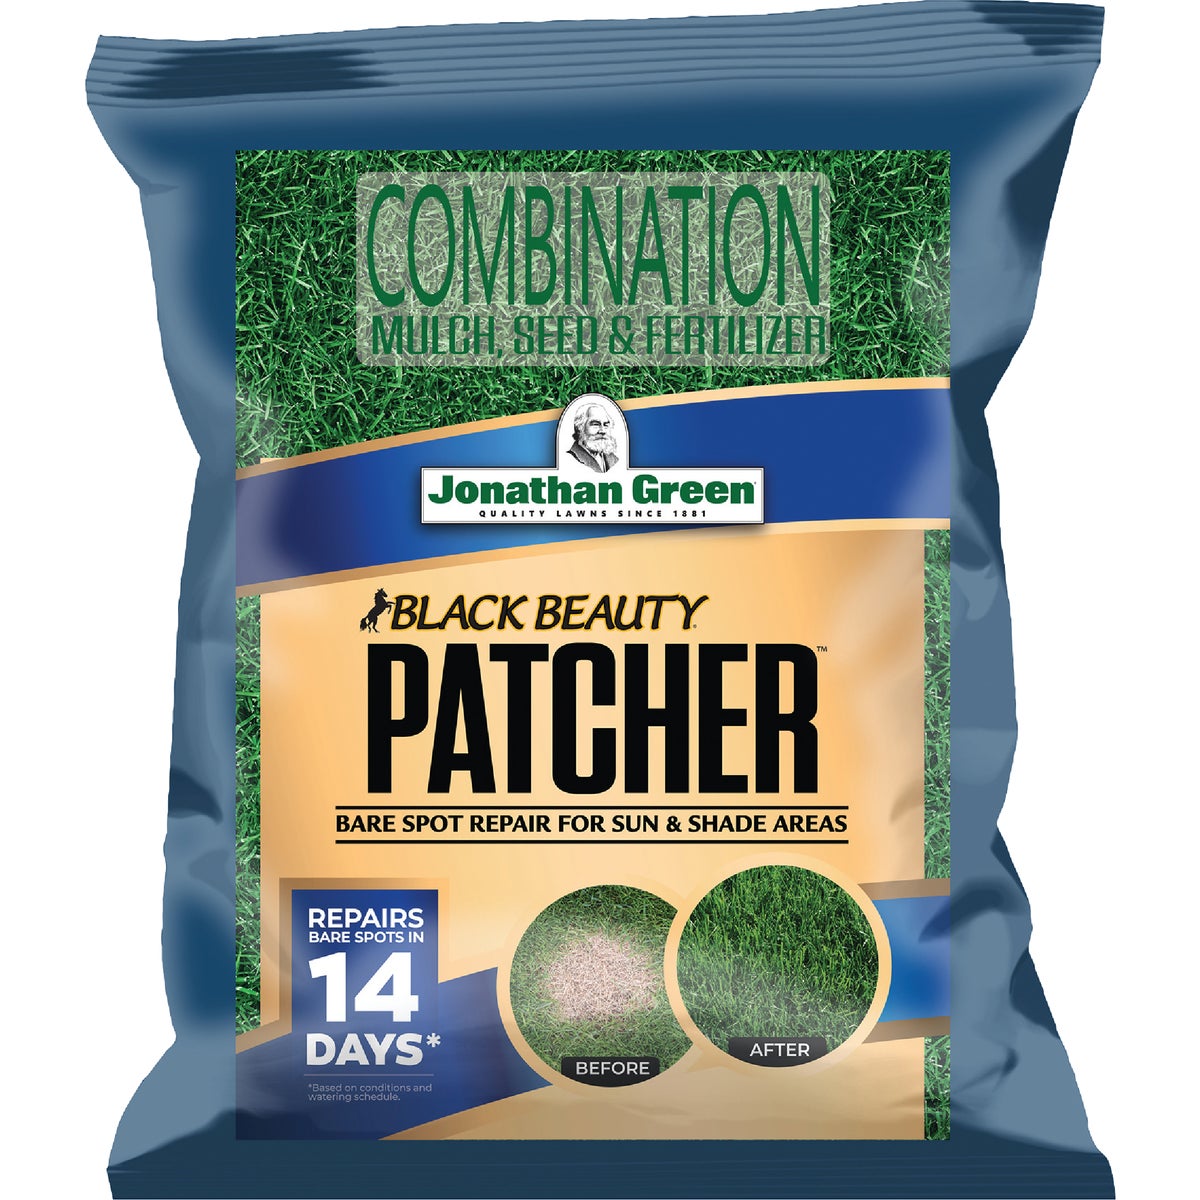 Jonathan Green Black Beauty Patcher 8 Lb. 300 Sq. Ft. Combination Mulch, Seed, & Fertilizer